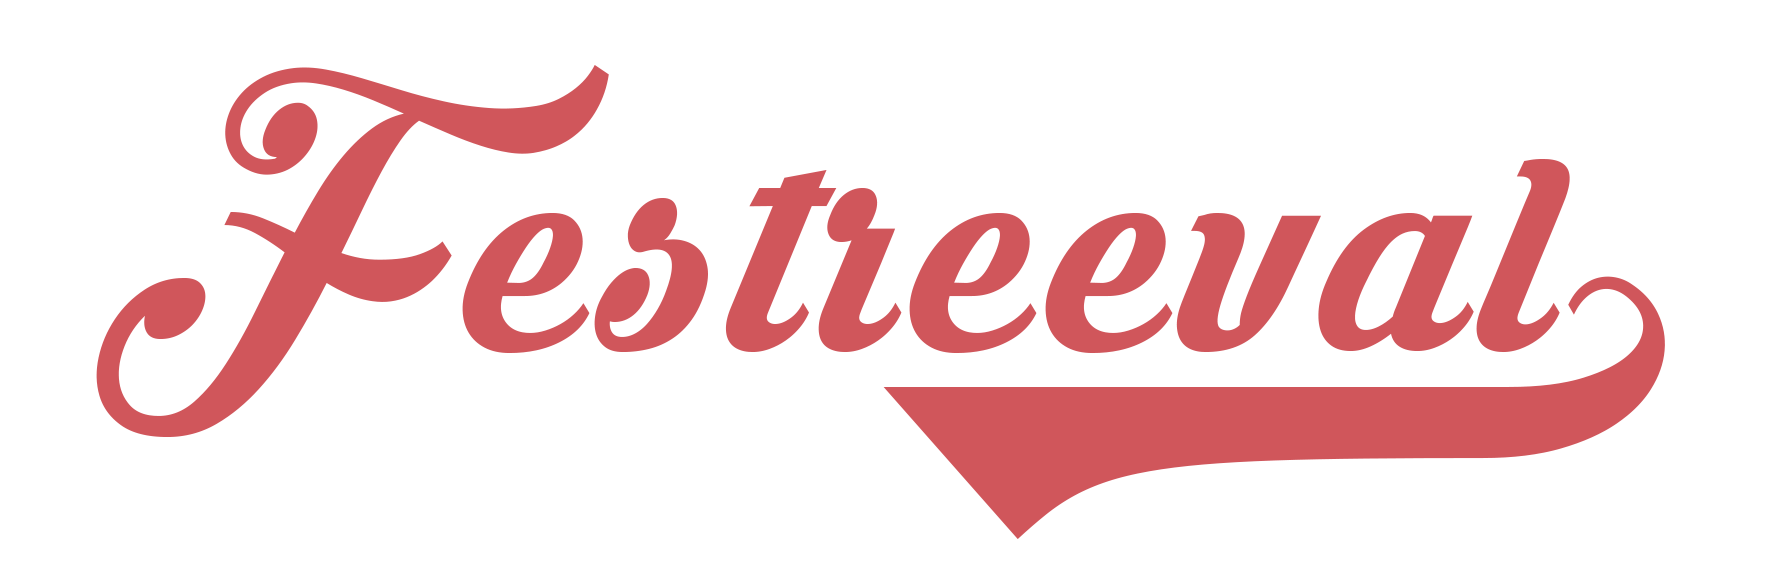 Projectfingertips logo